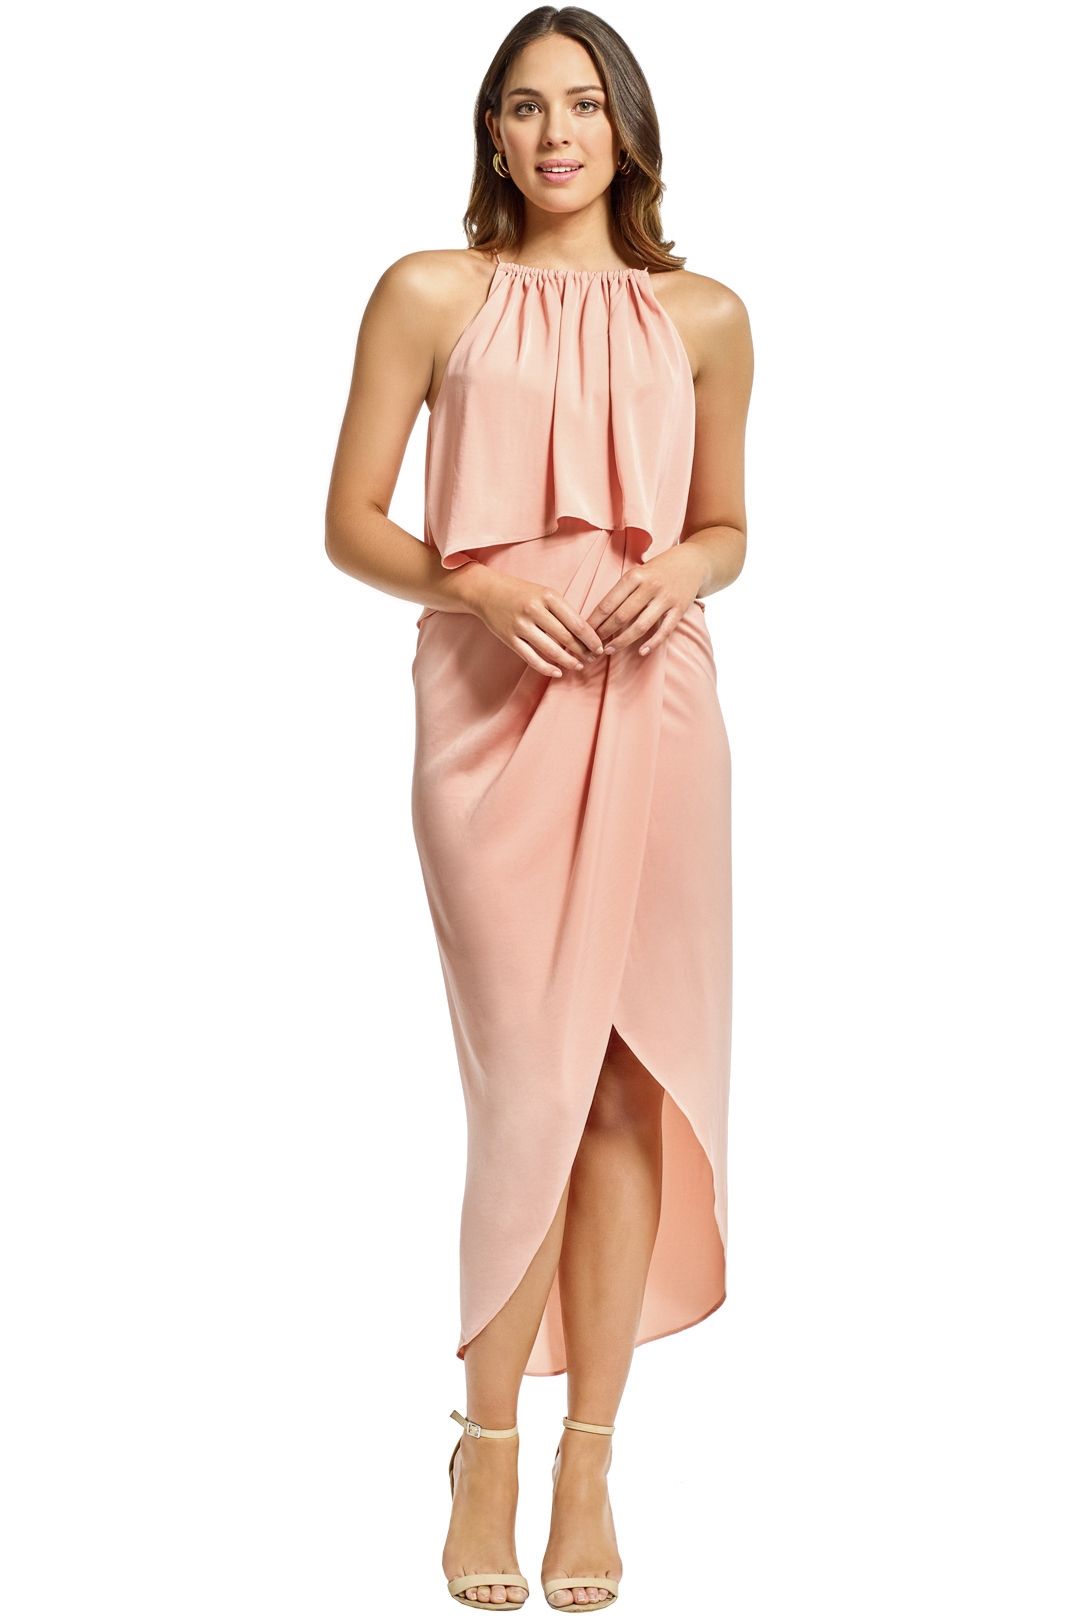 Shona Joy - Frill High Neck Drape Maxi Dress - Dusty Pink - Front